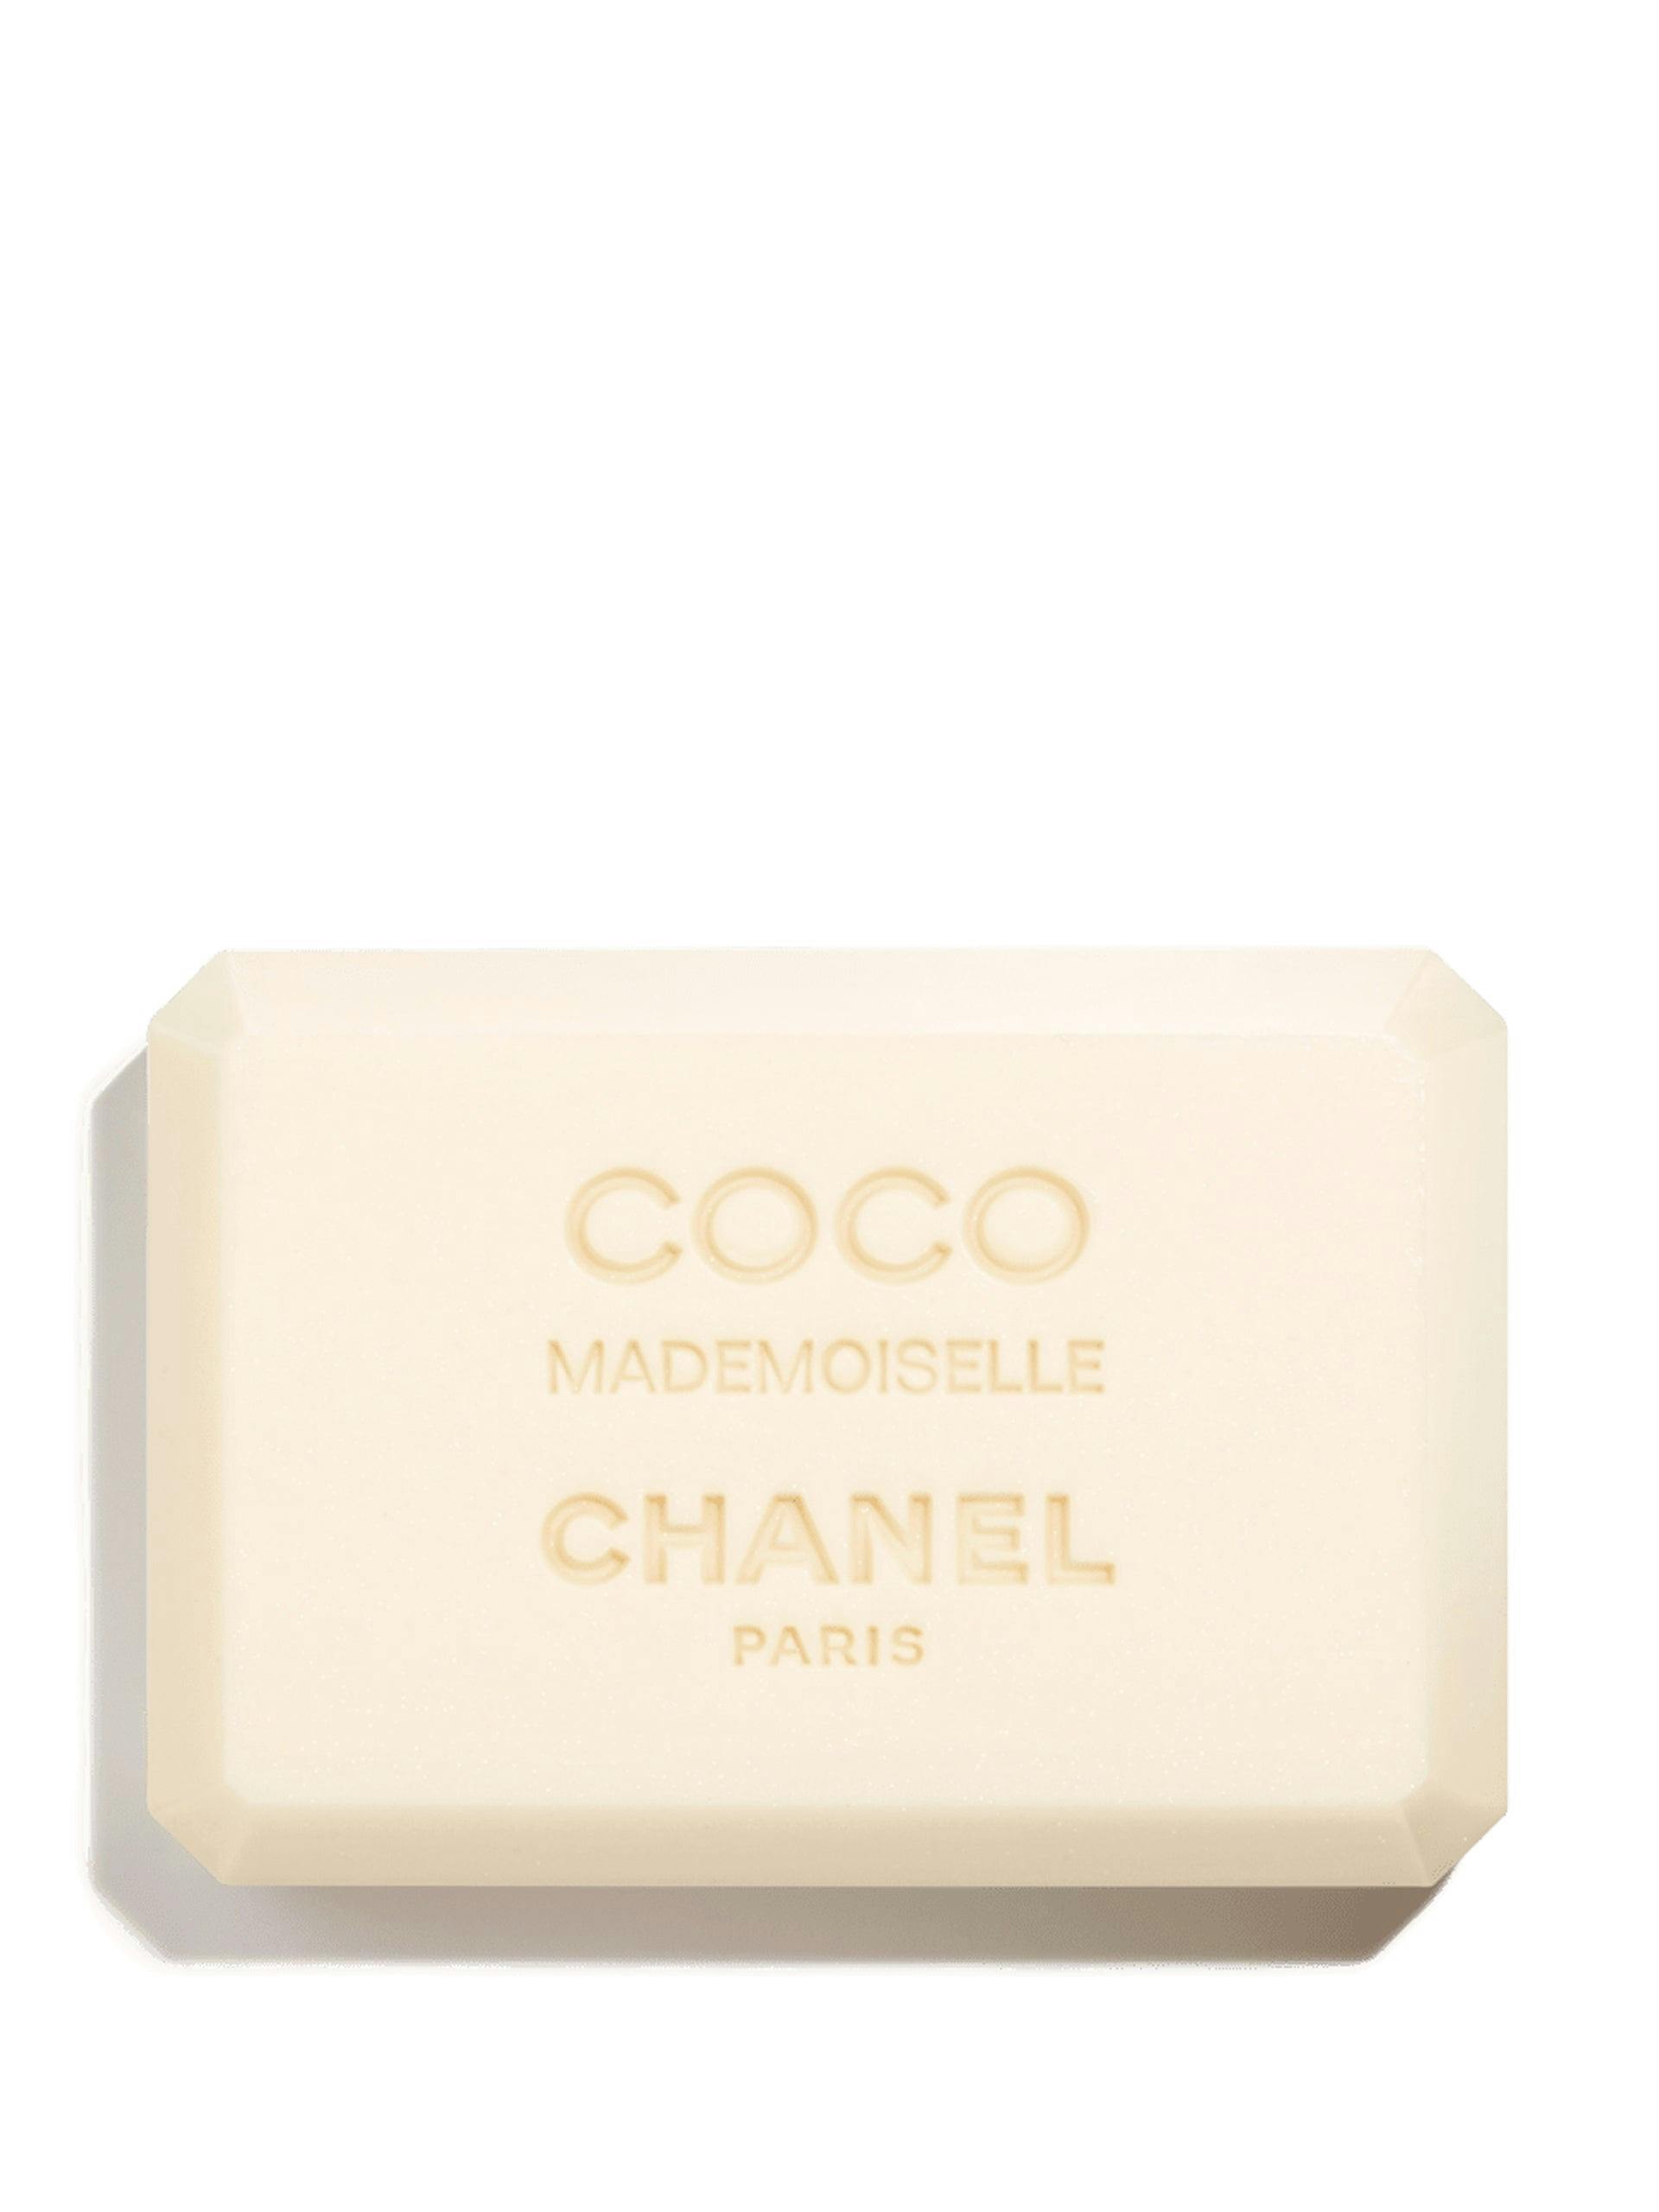 Coco Mademoiselle gentle perfumed soap